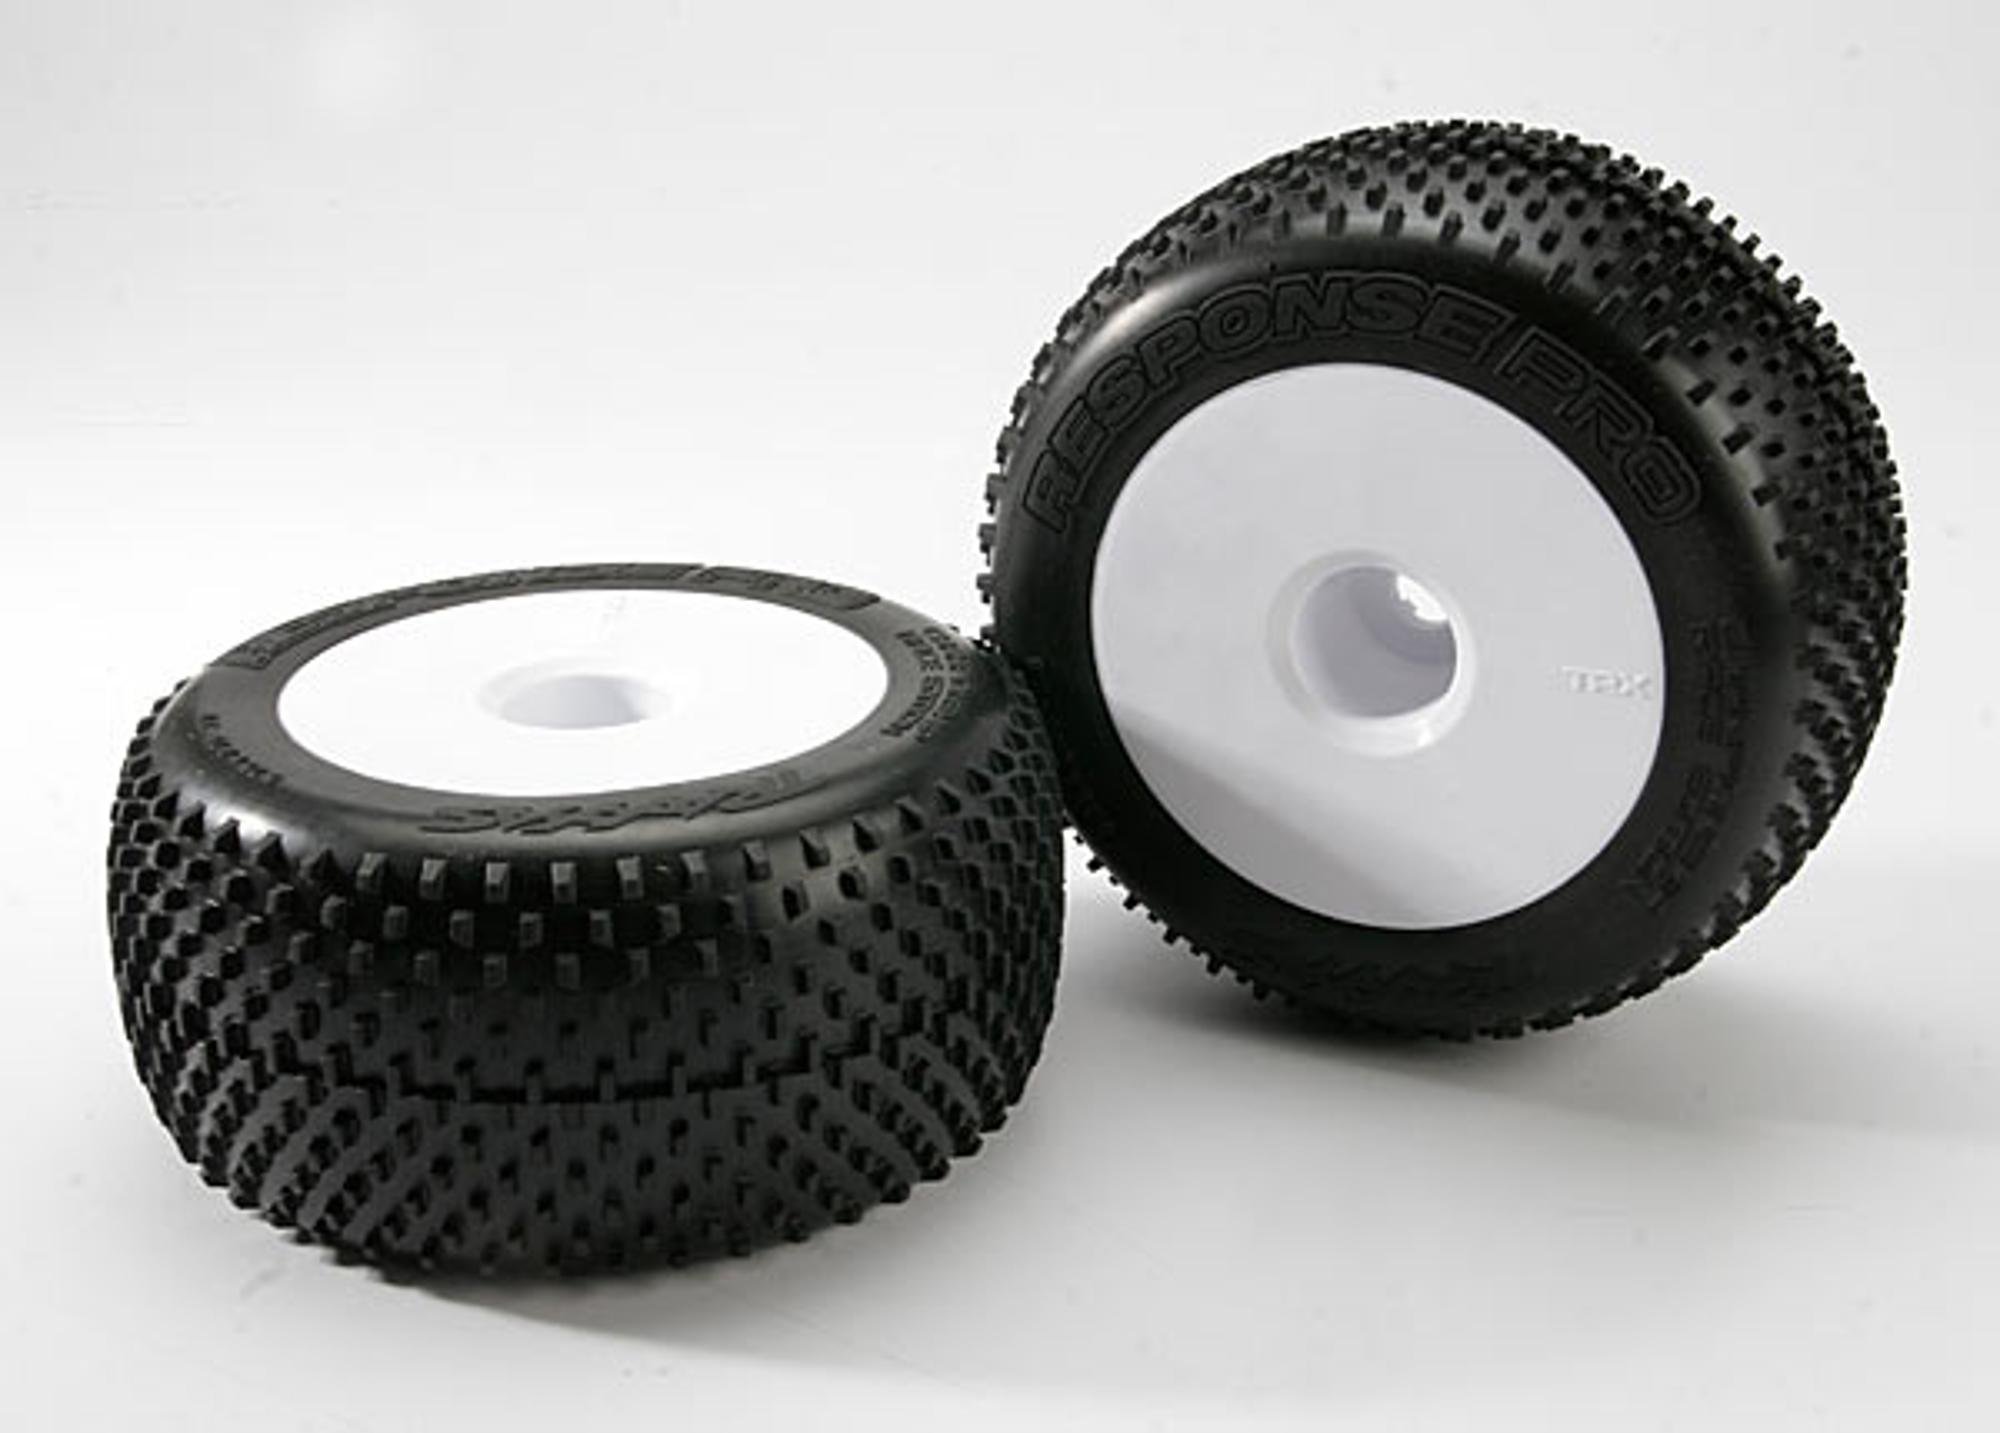 Traxxas Response Pro Tires w/ Foam Inserts (White Dished, 2 pcs)